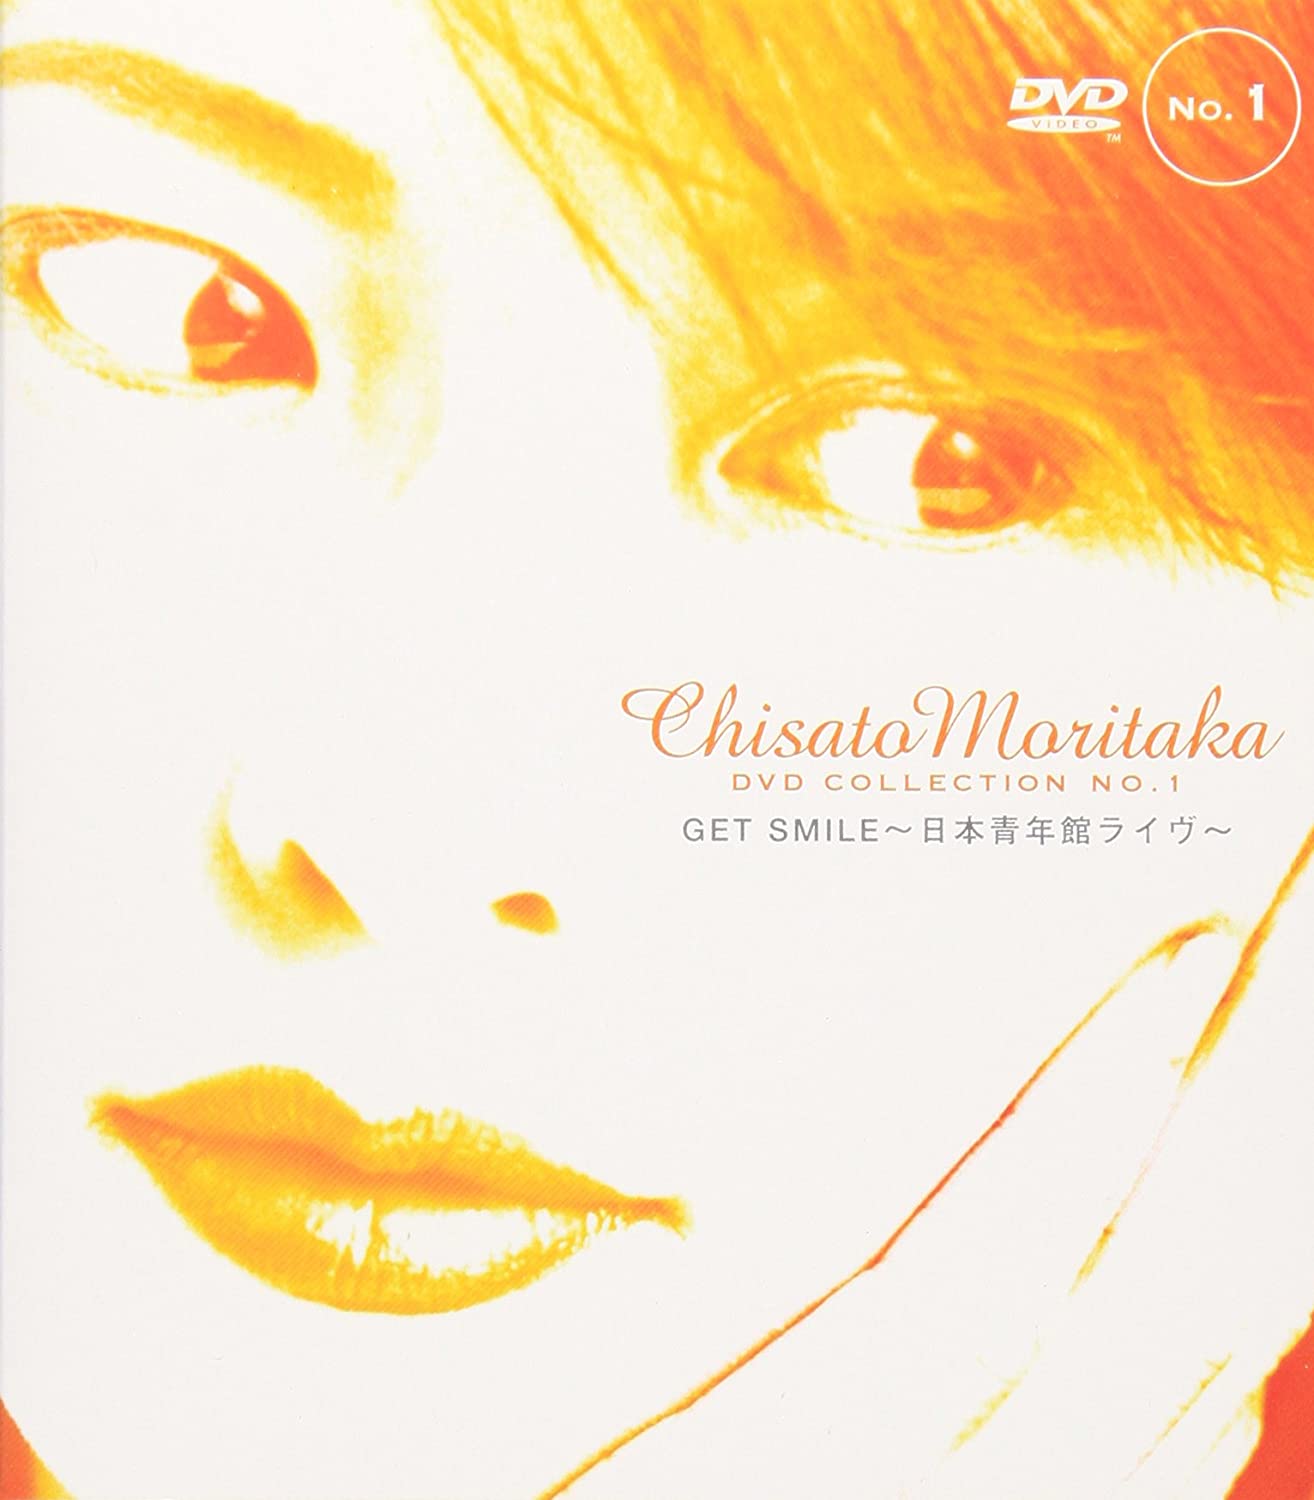 CHISATO MORITAKA DVD COLLECTION No.1 GET SMILE ~ Nippon ...